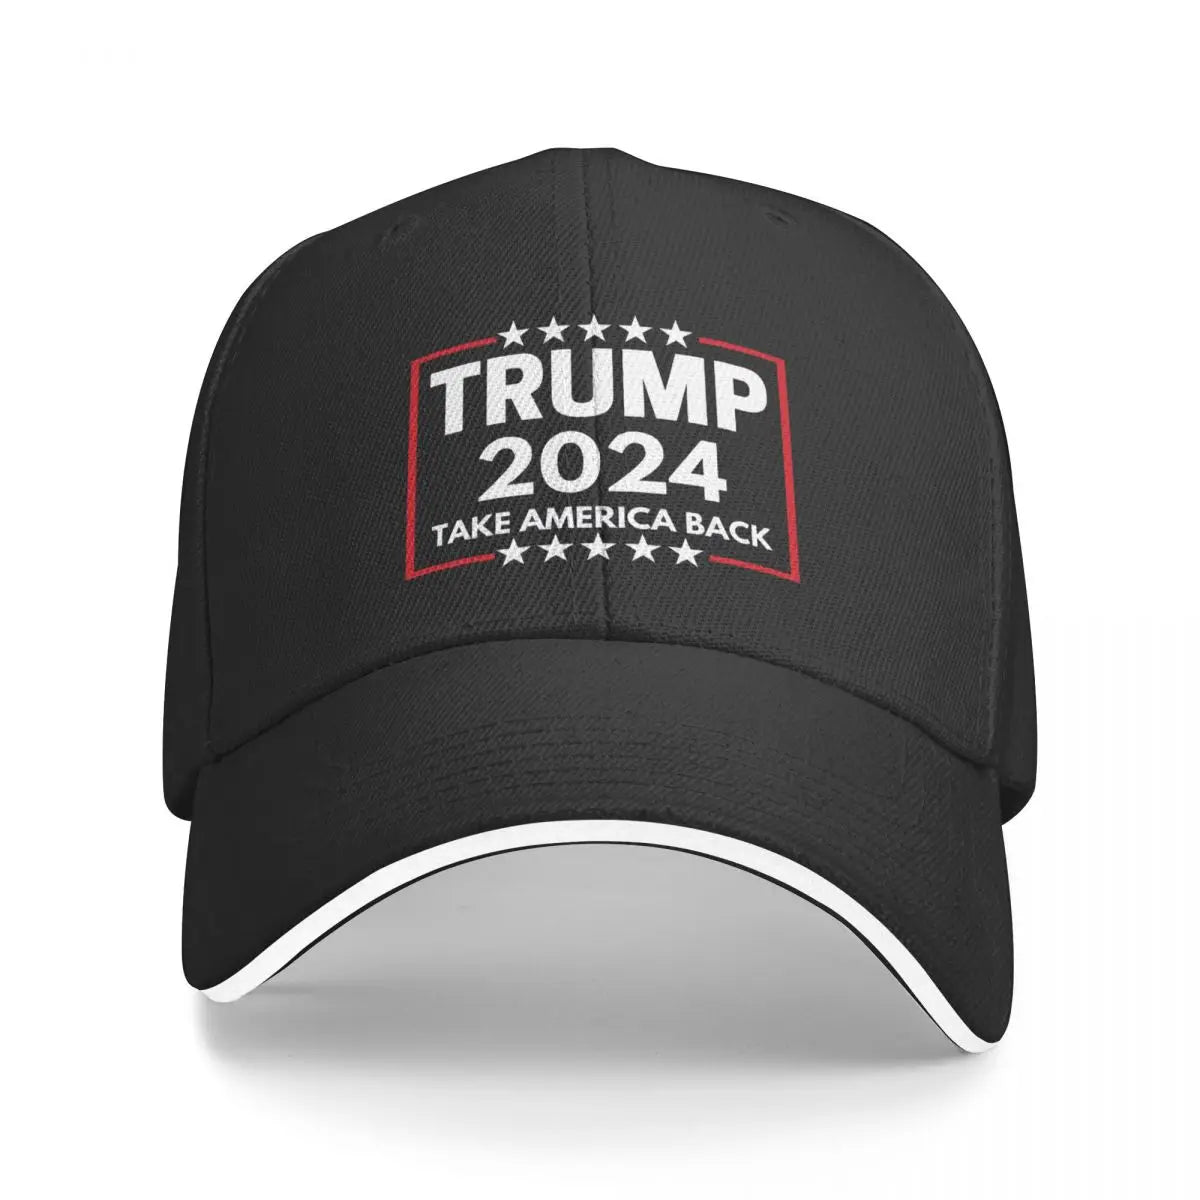 Trump 2024 Baseball Cap - Take America Back